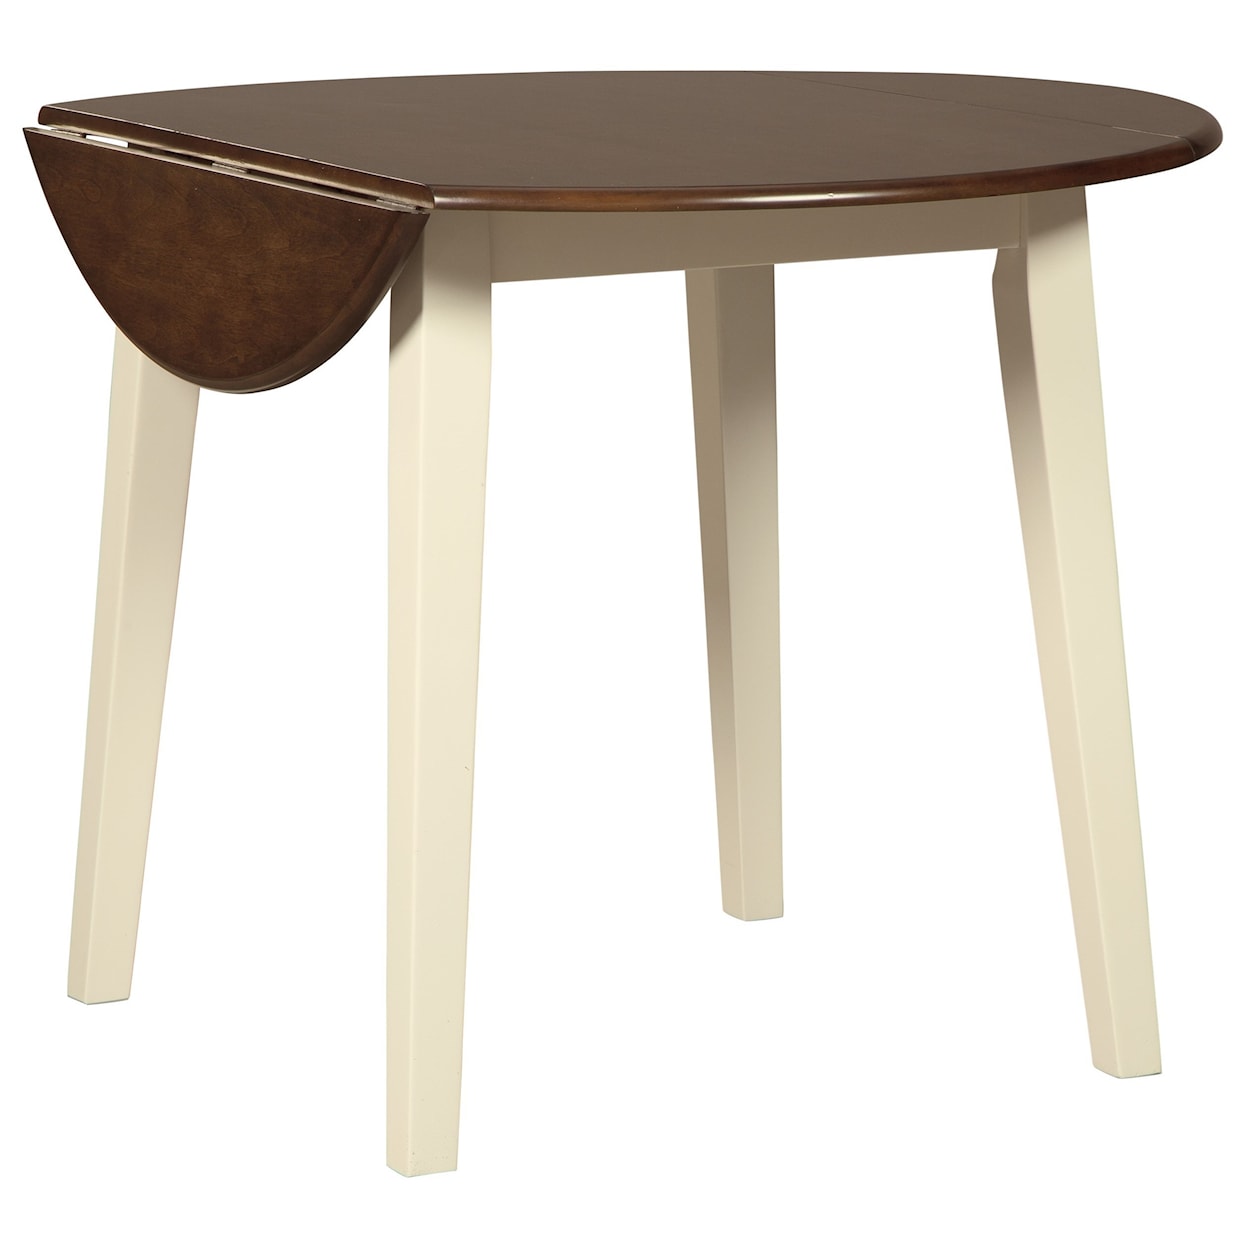 Ashley Furniture Signature Design Woodanville Round Dining Room Drop Leaf Table